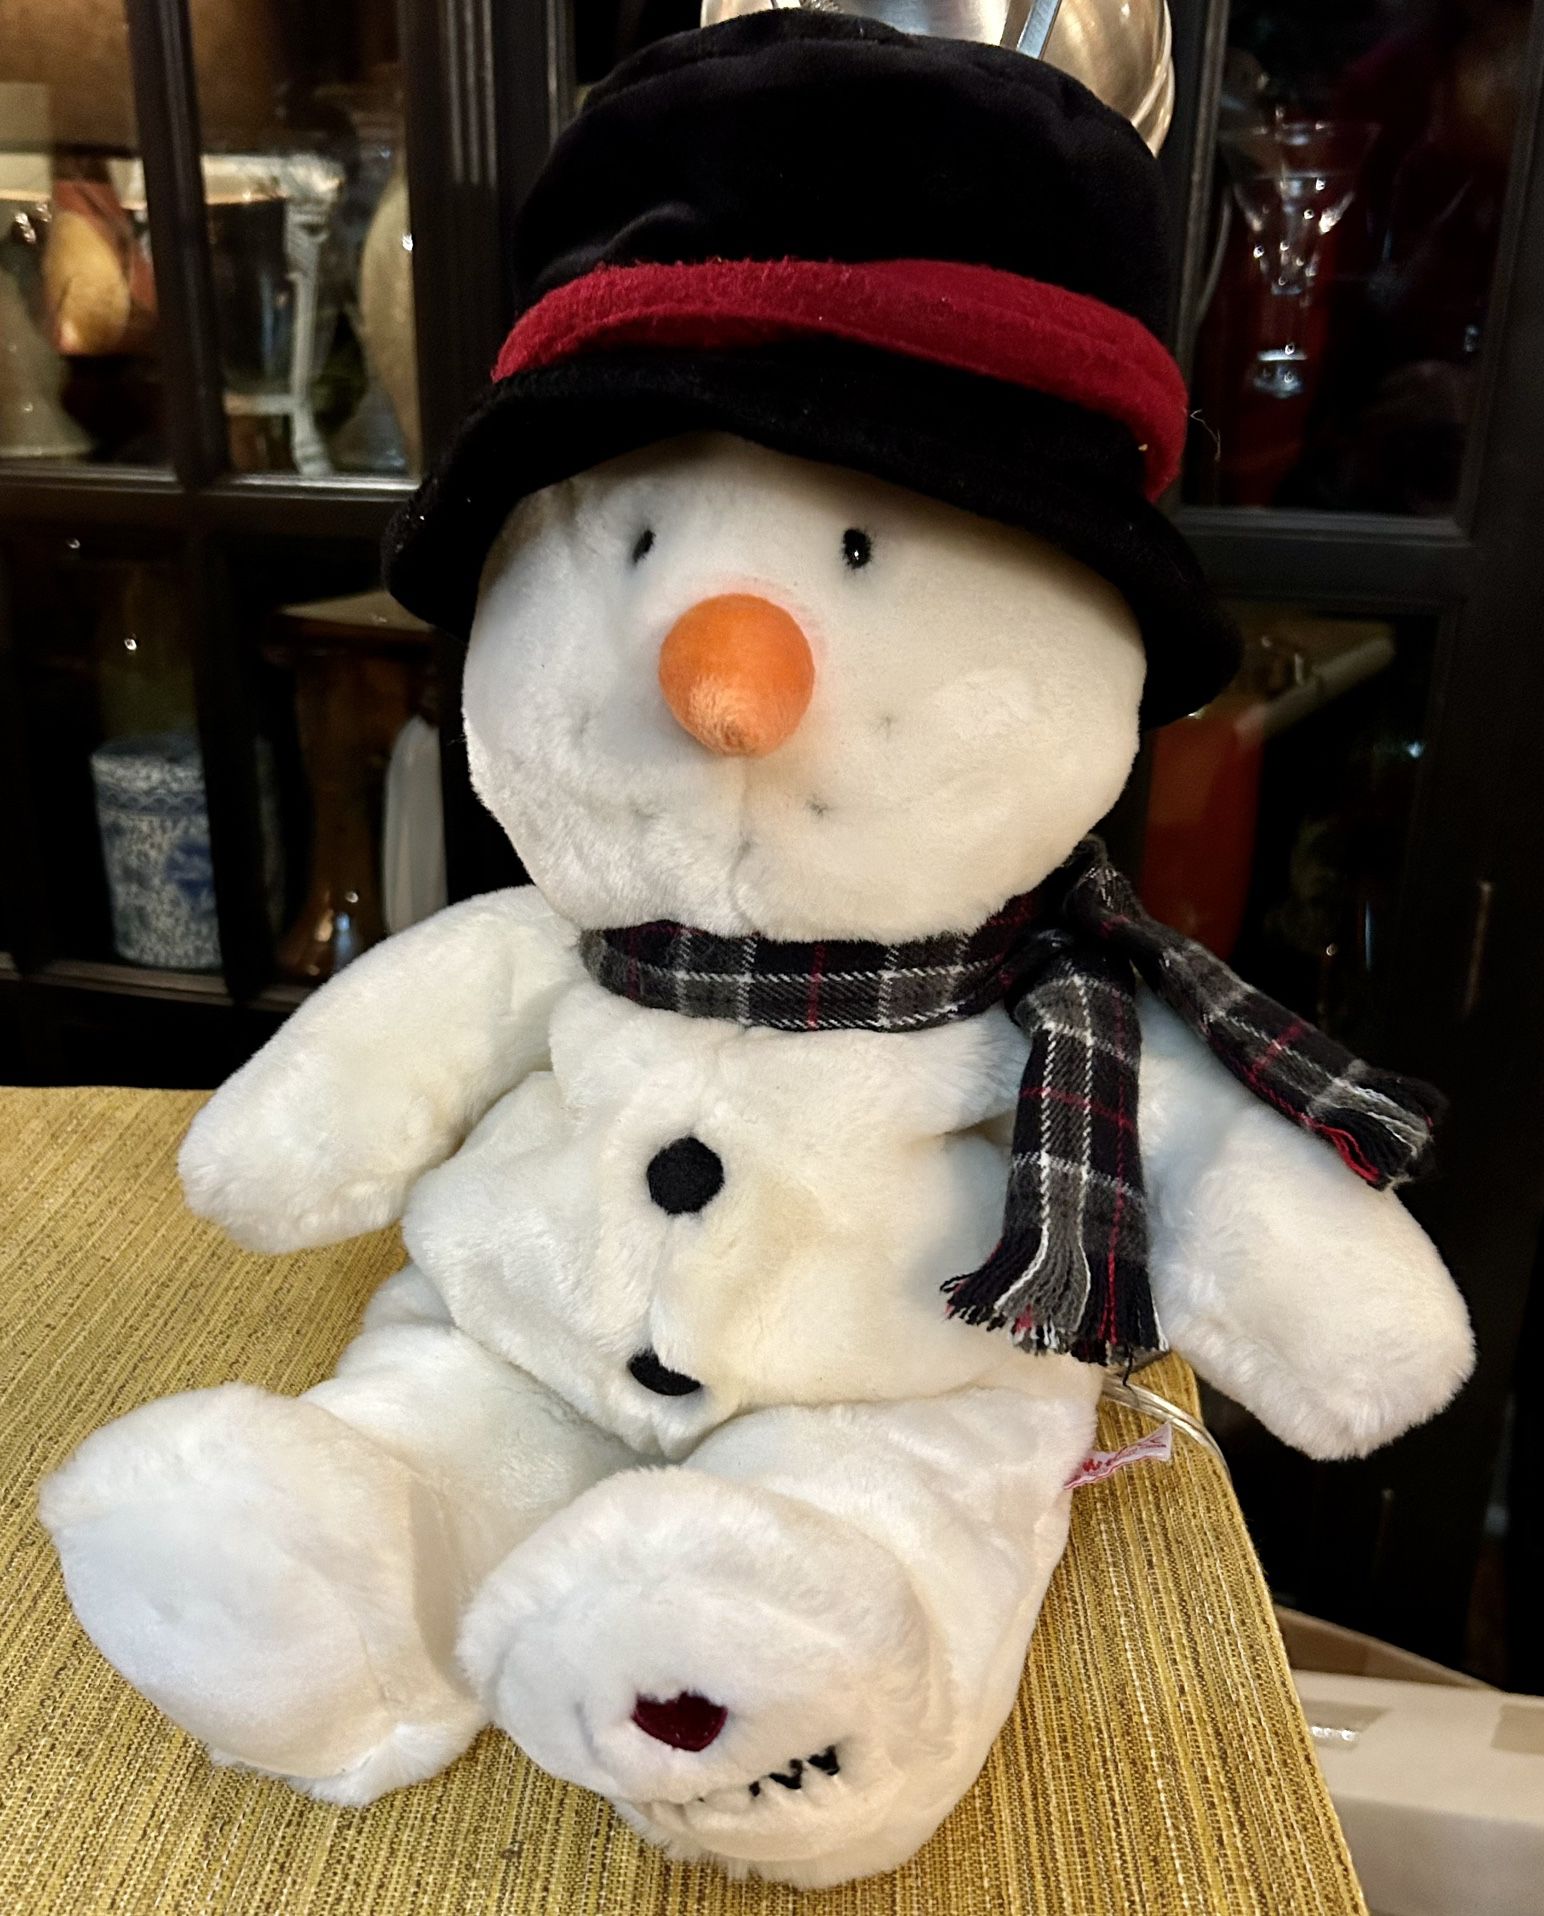 Russ Berrie Snowflake Fluffy White Stuffed Snowman